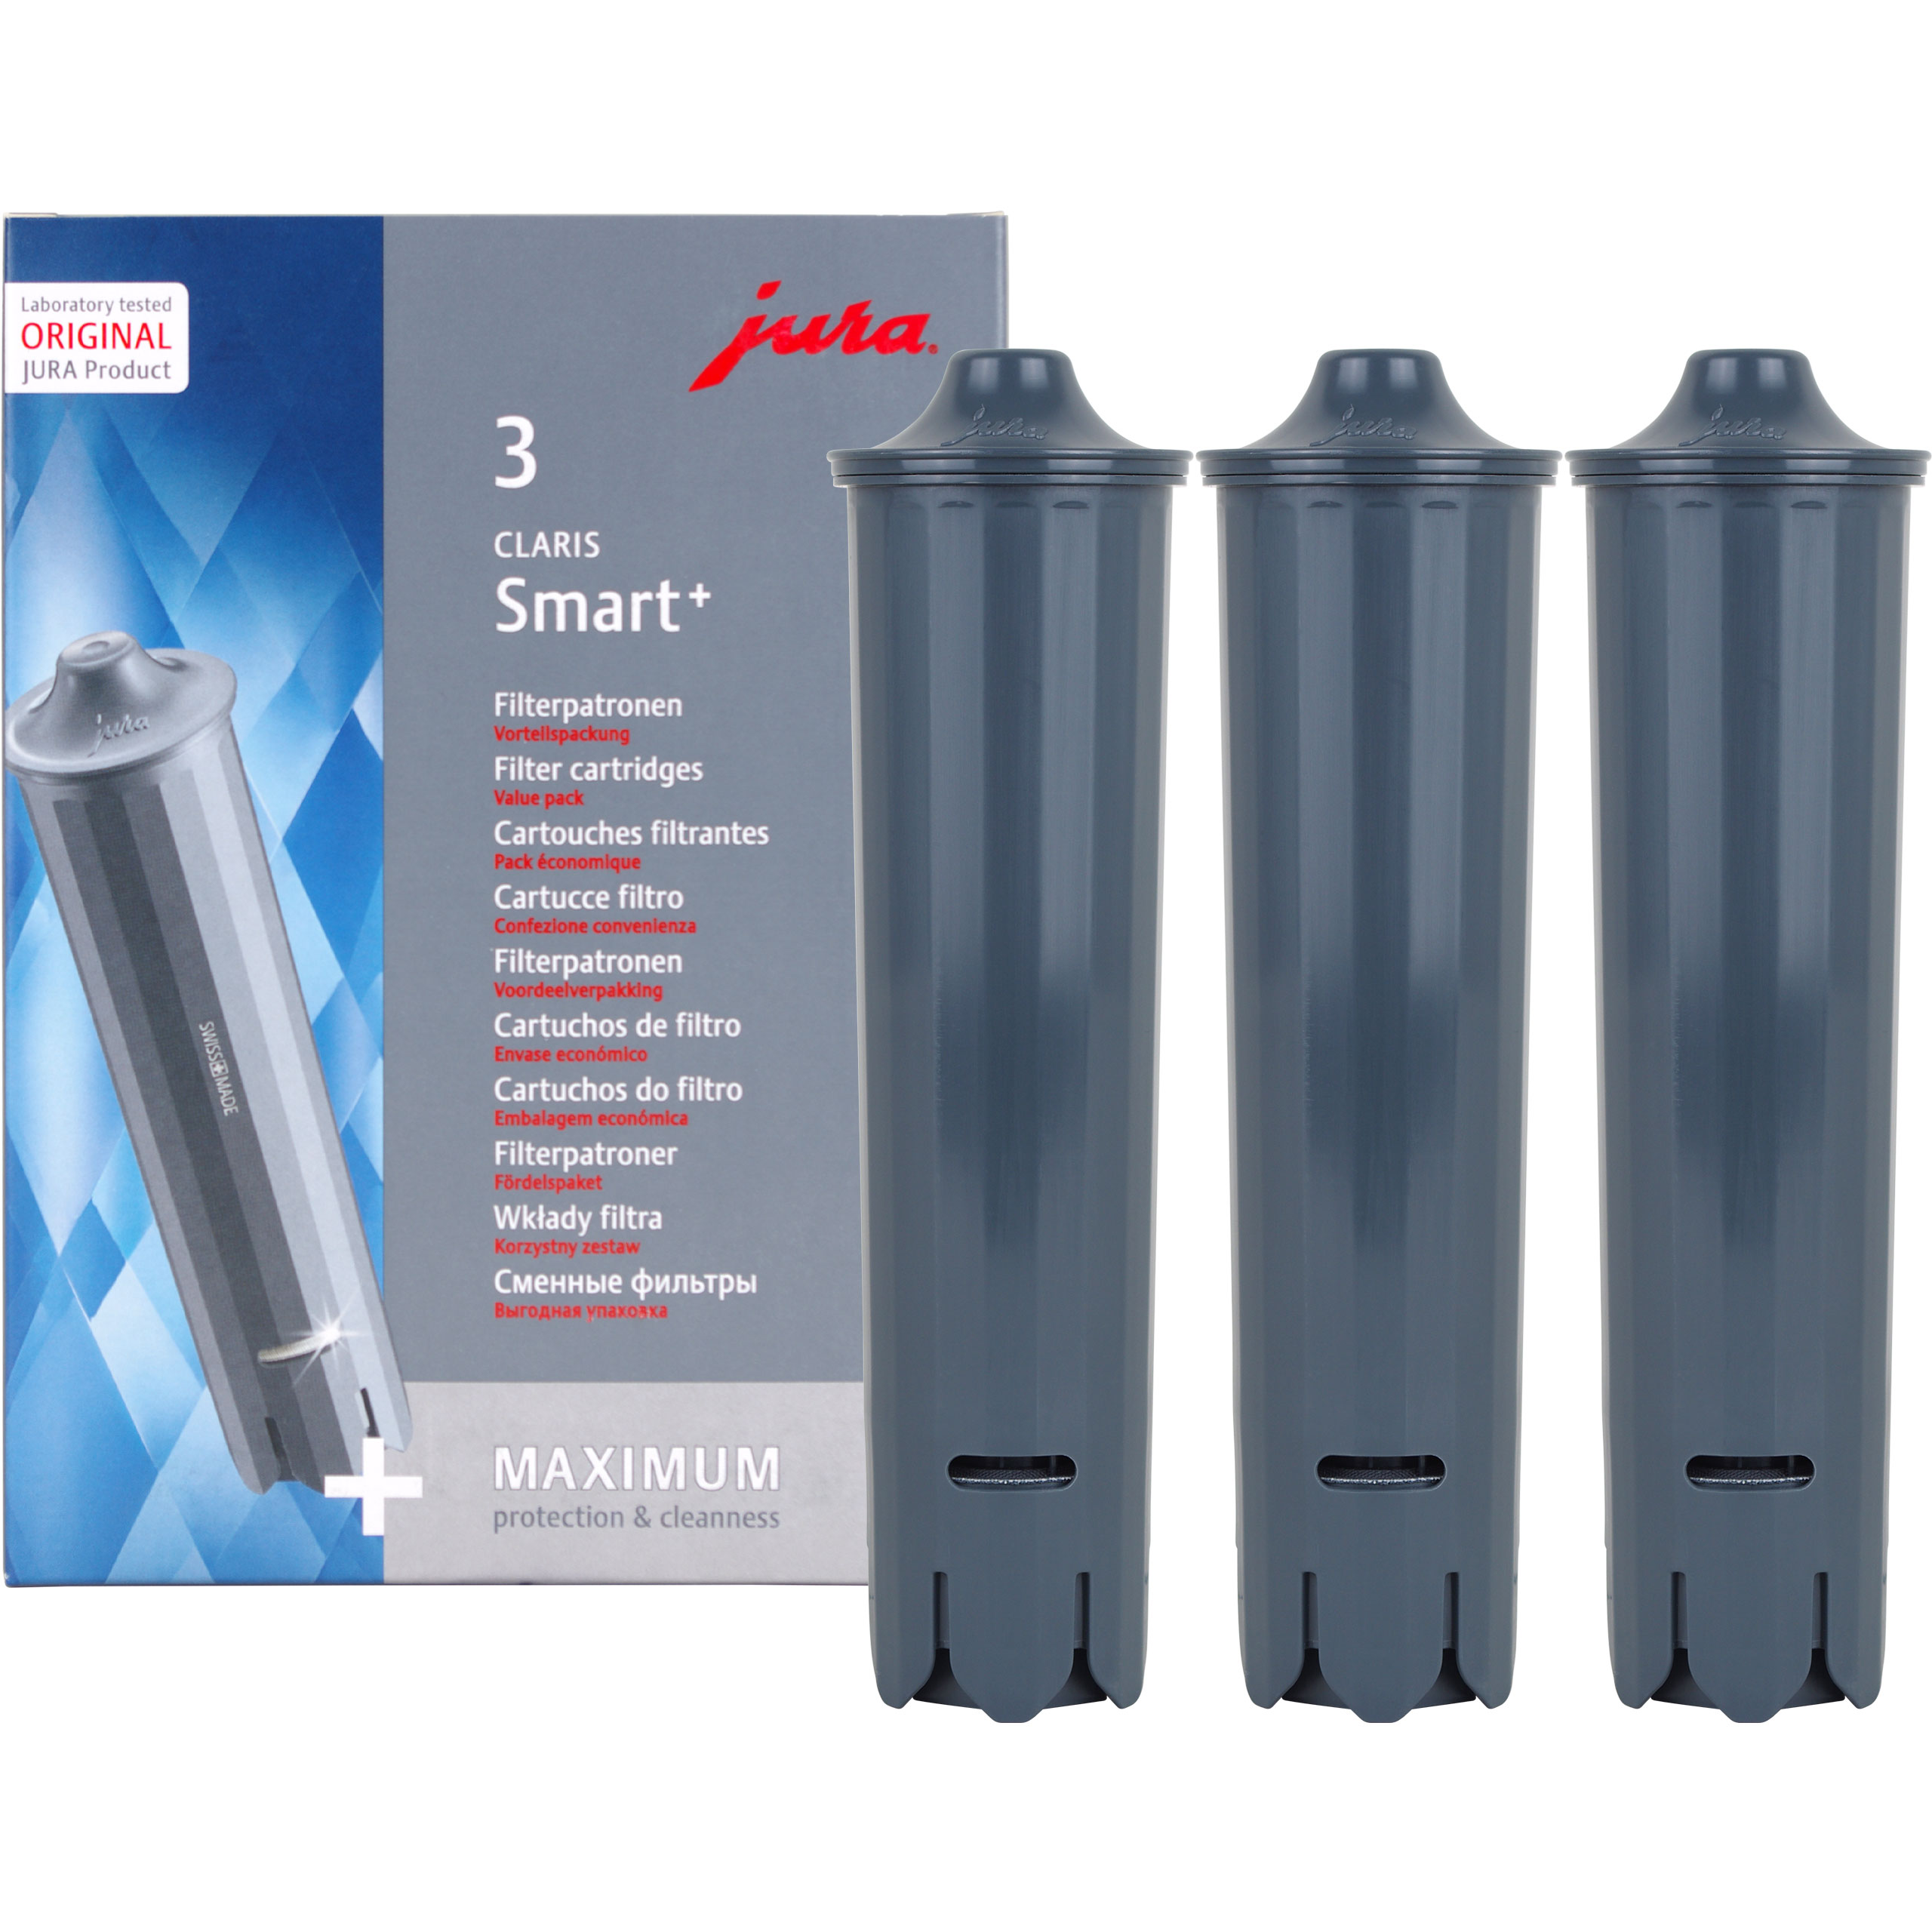 Jura Claris Smart Water Filters (3 Pack) - $47.73!